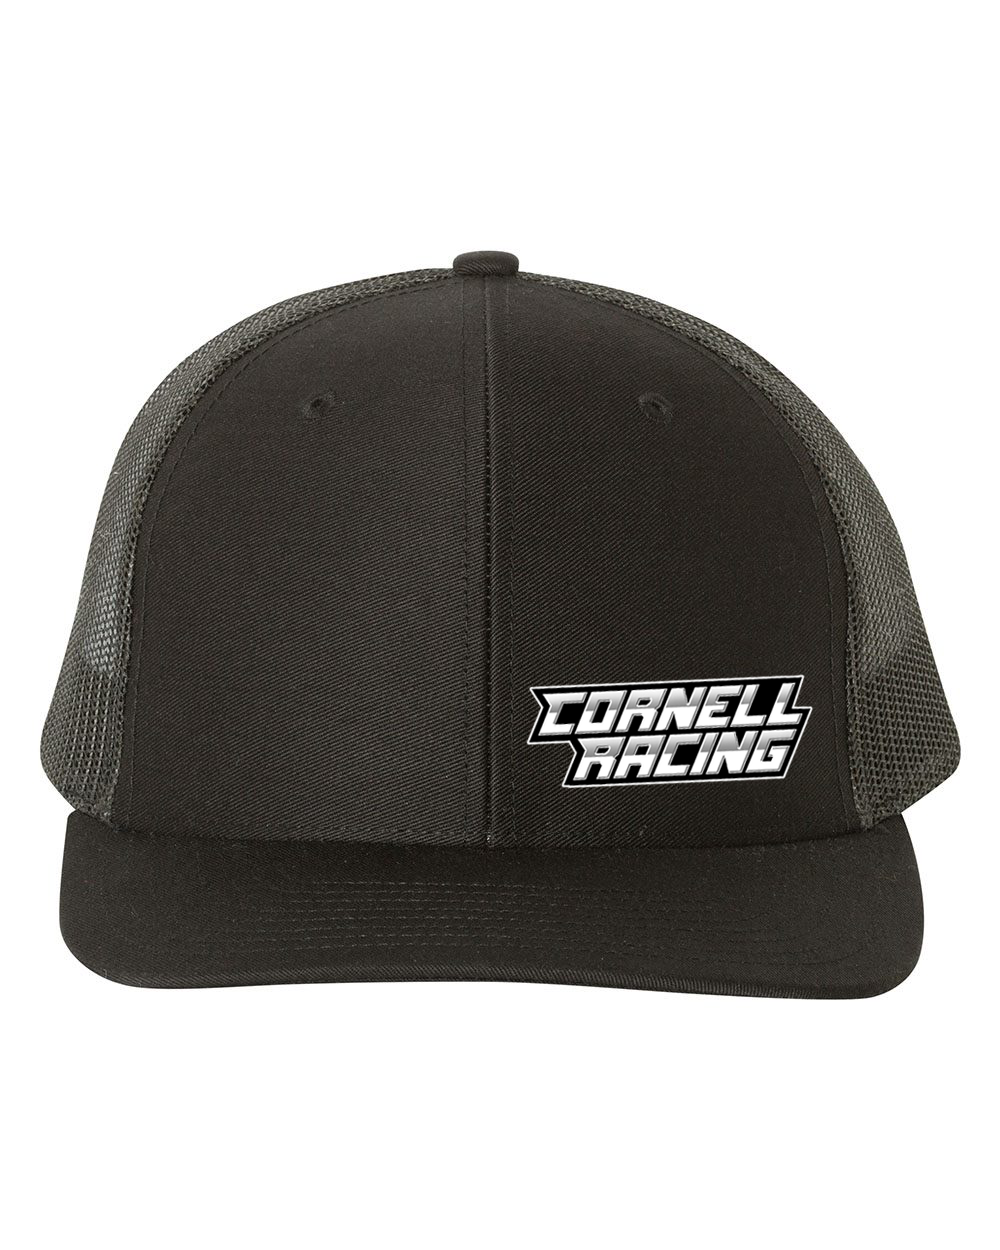 Cornell Racing Hats